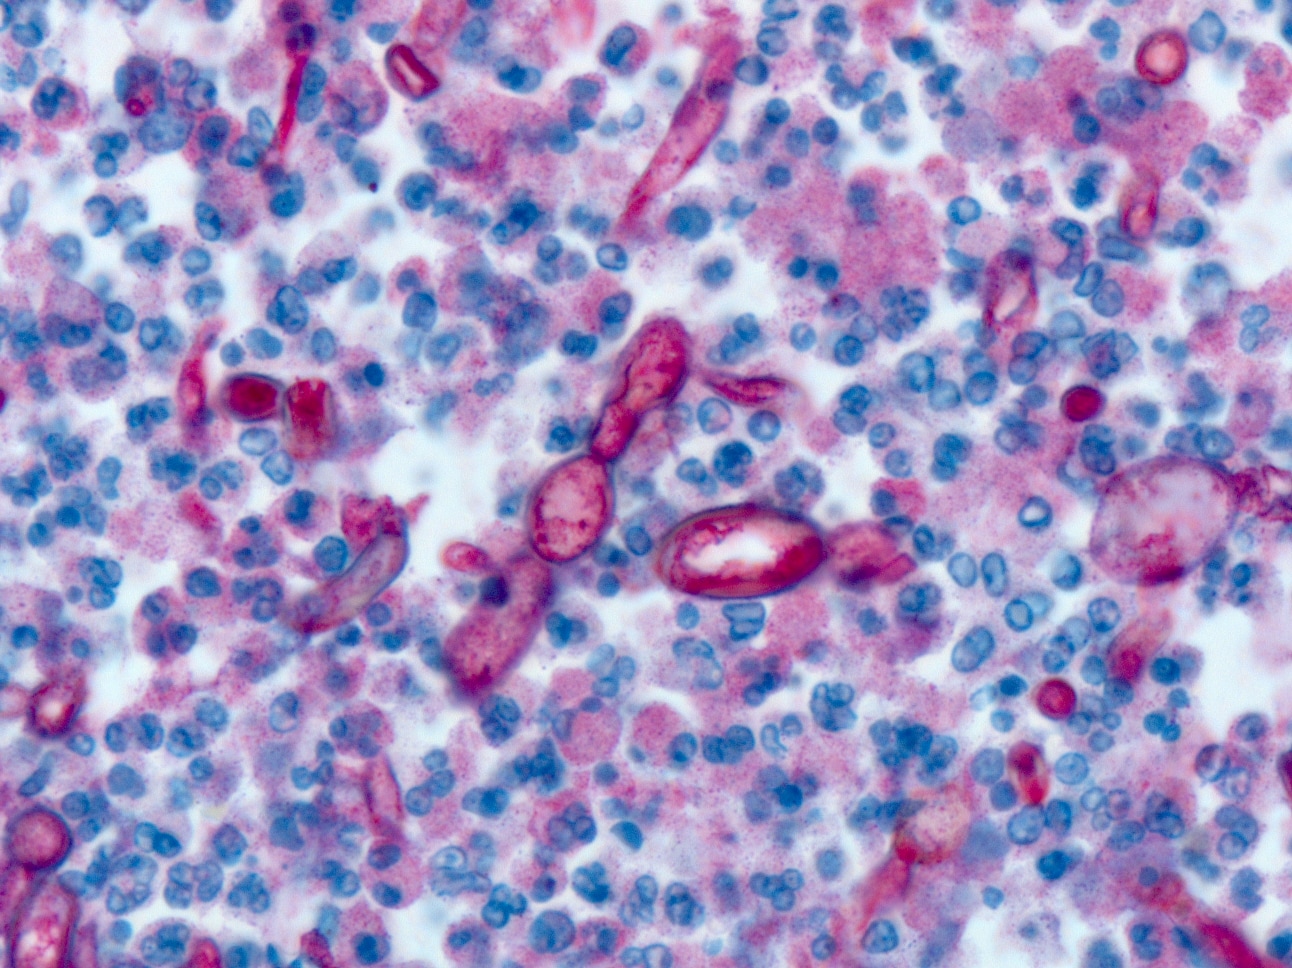 Immunohistochemistry (IHC) showing Exserohilum fungus in a case from the 2012 fungal meningitis outbreak